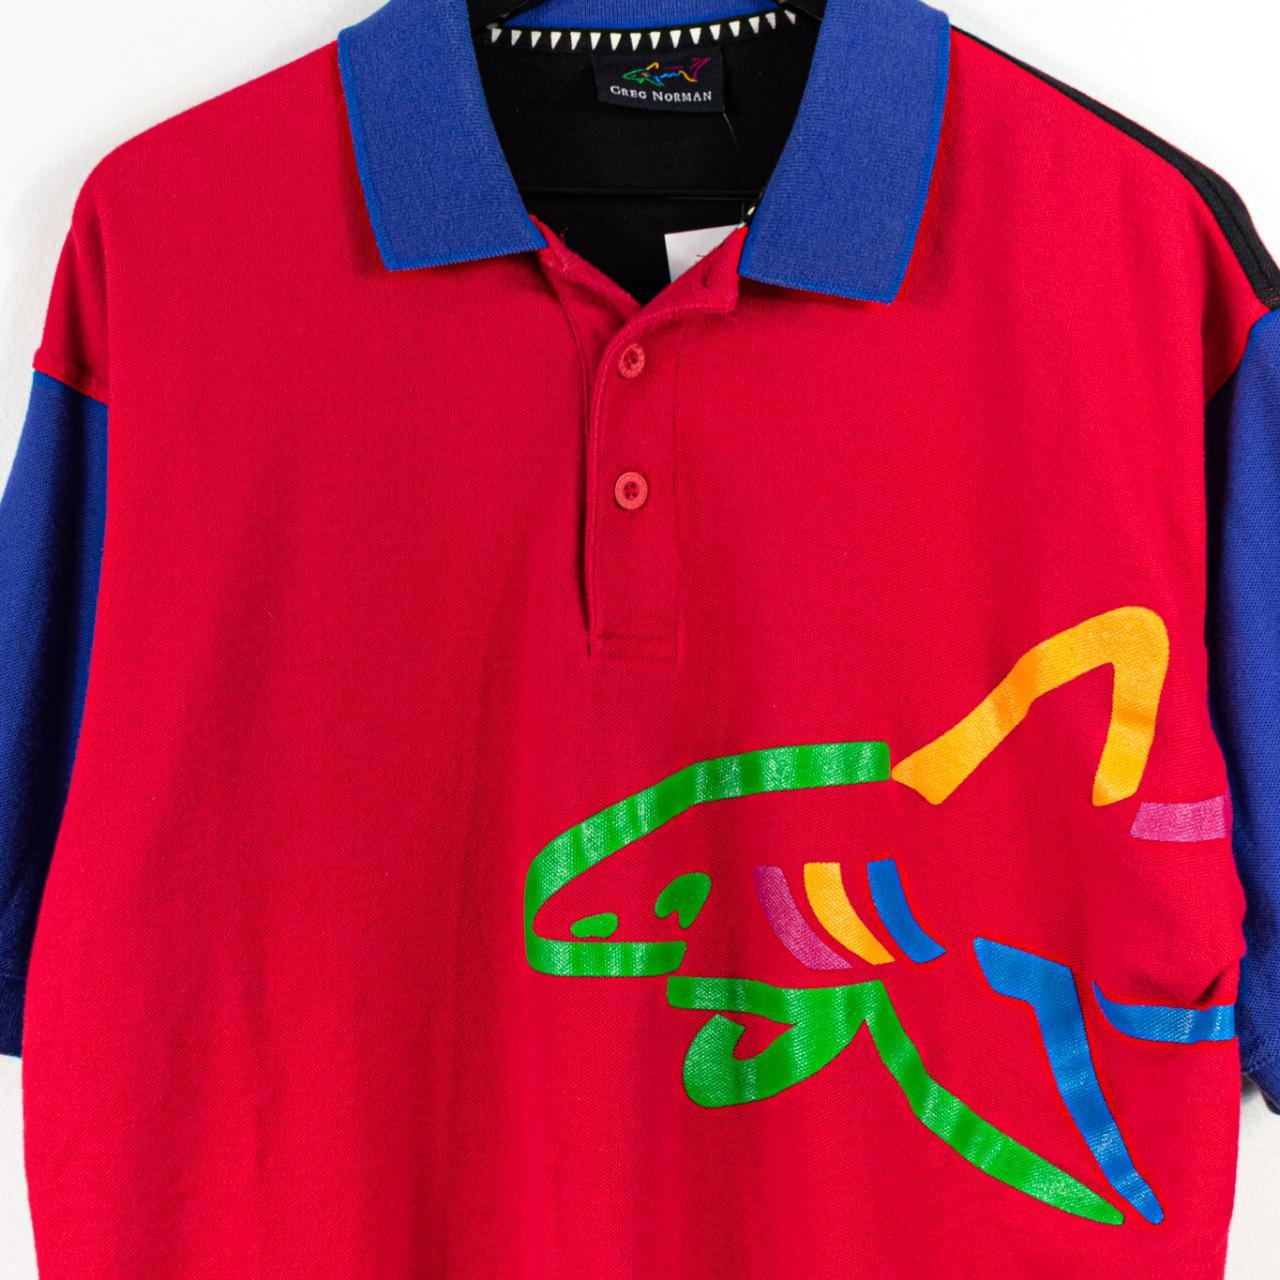 Greg Norman Shark Color Block Wrap Around Polo Shirt